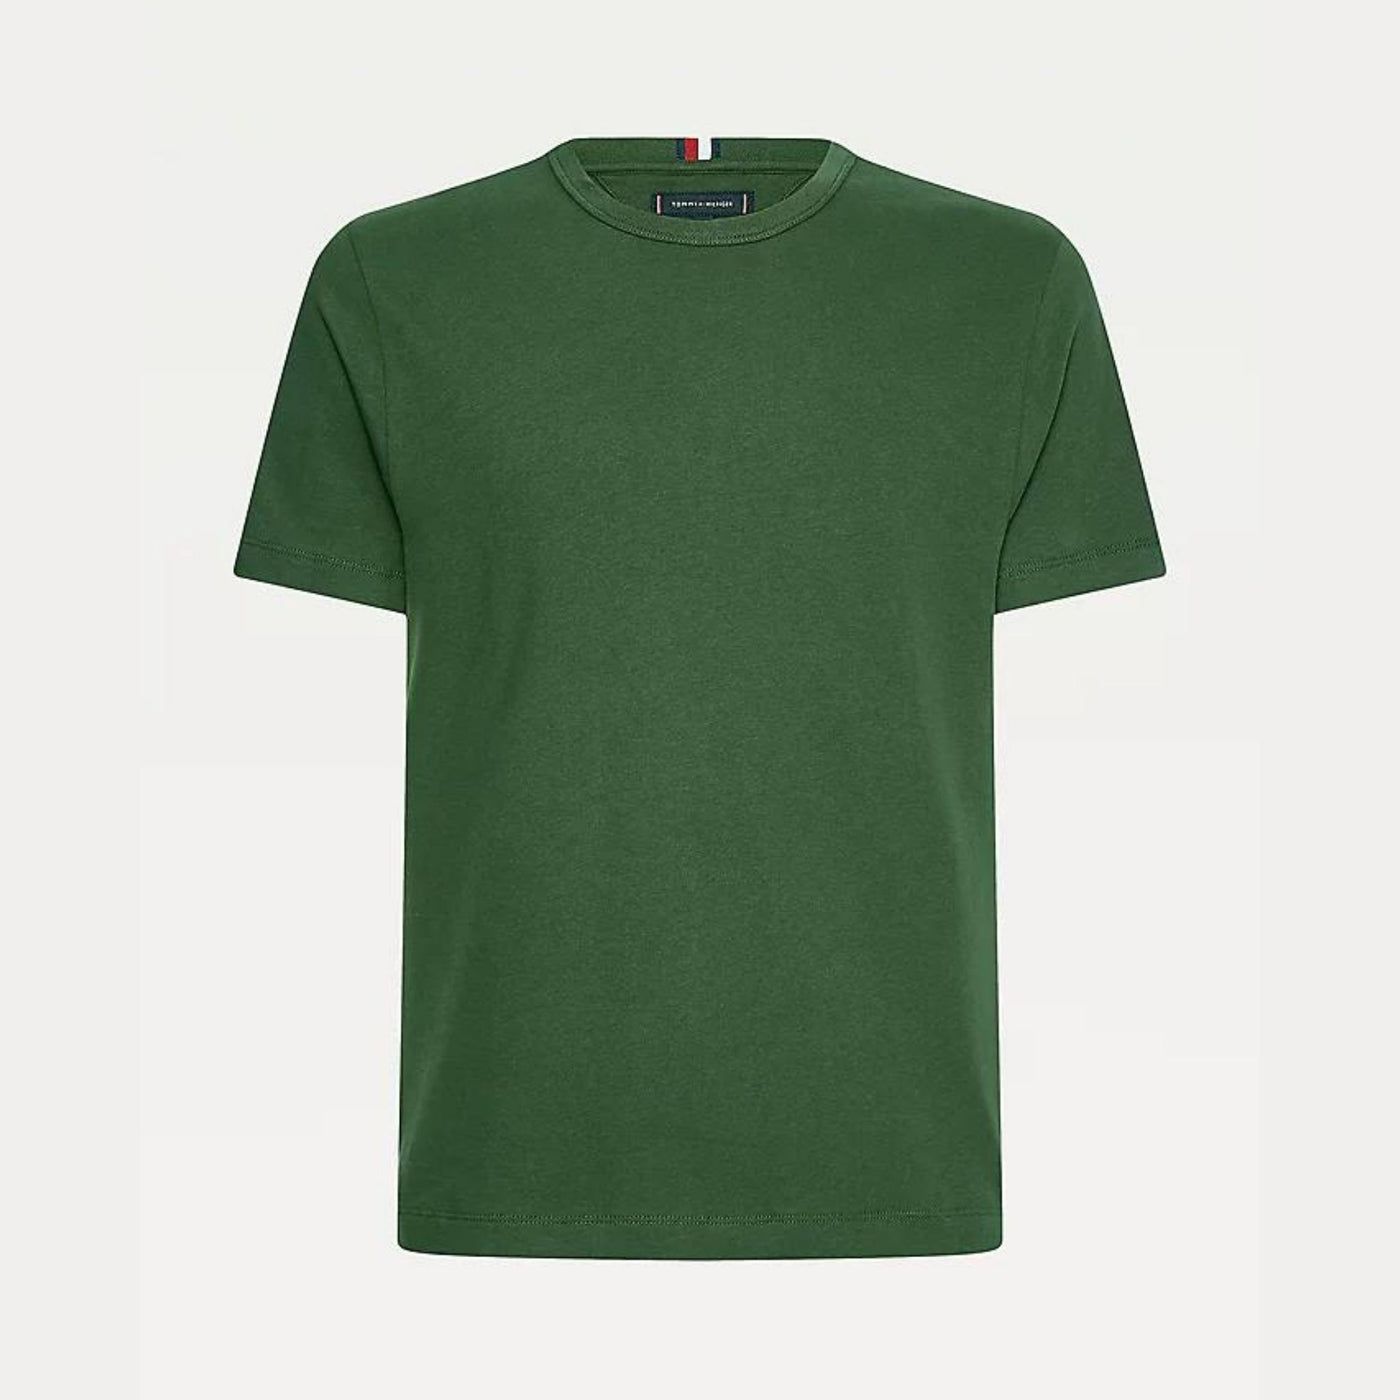 T-shirt da uomo verde firmata Tommy Hilfiger vista frontale